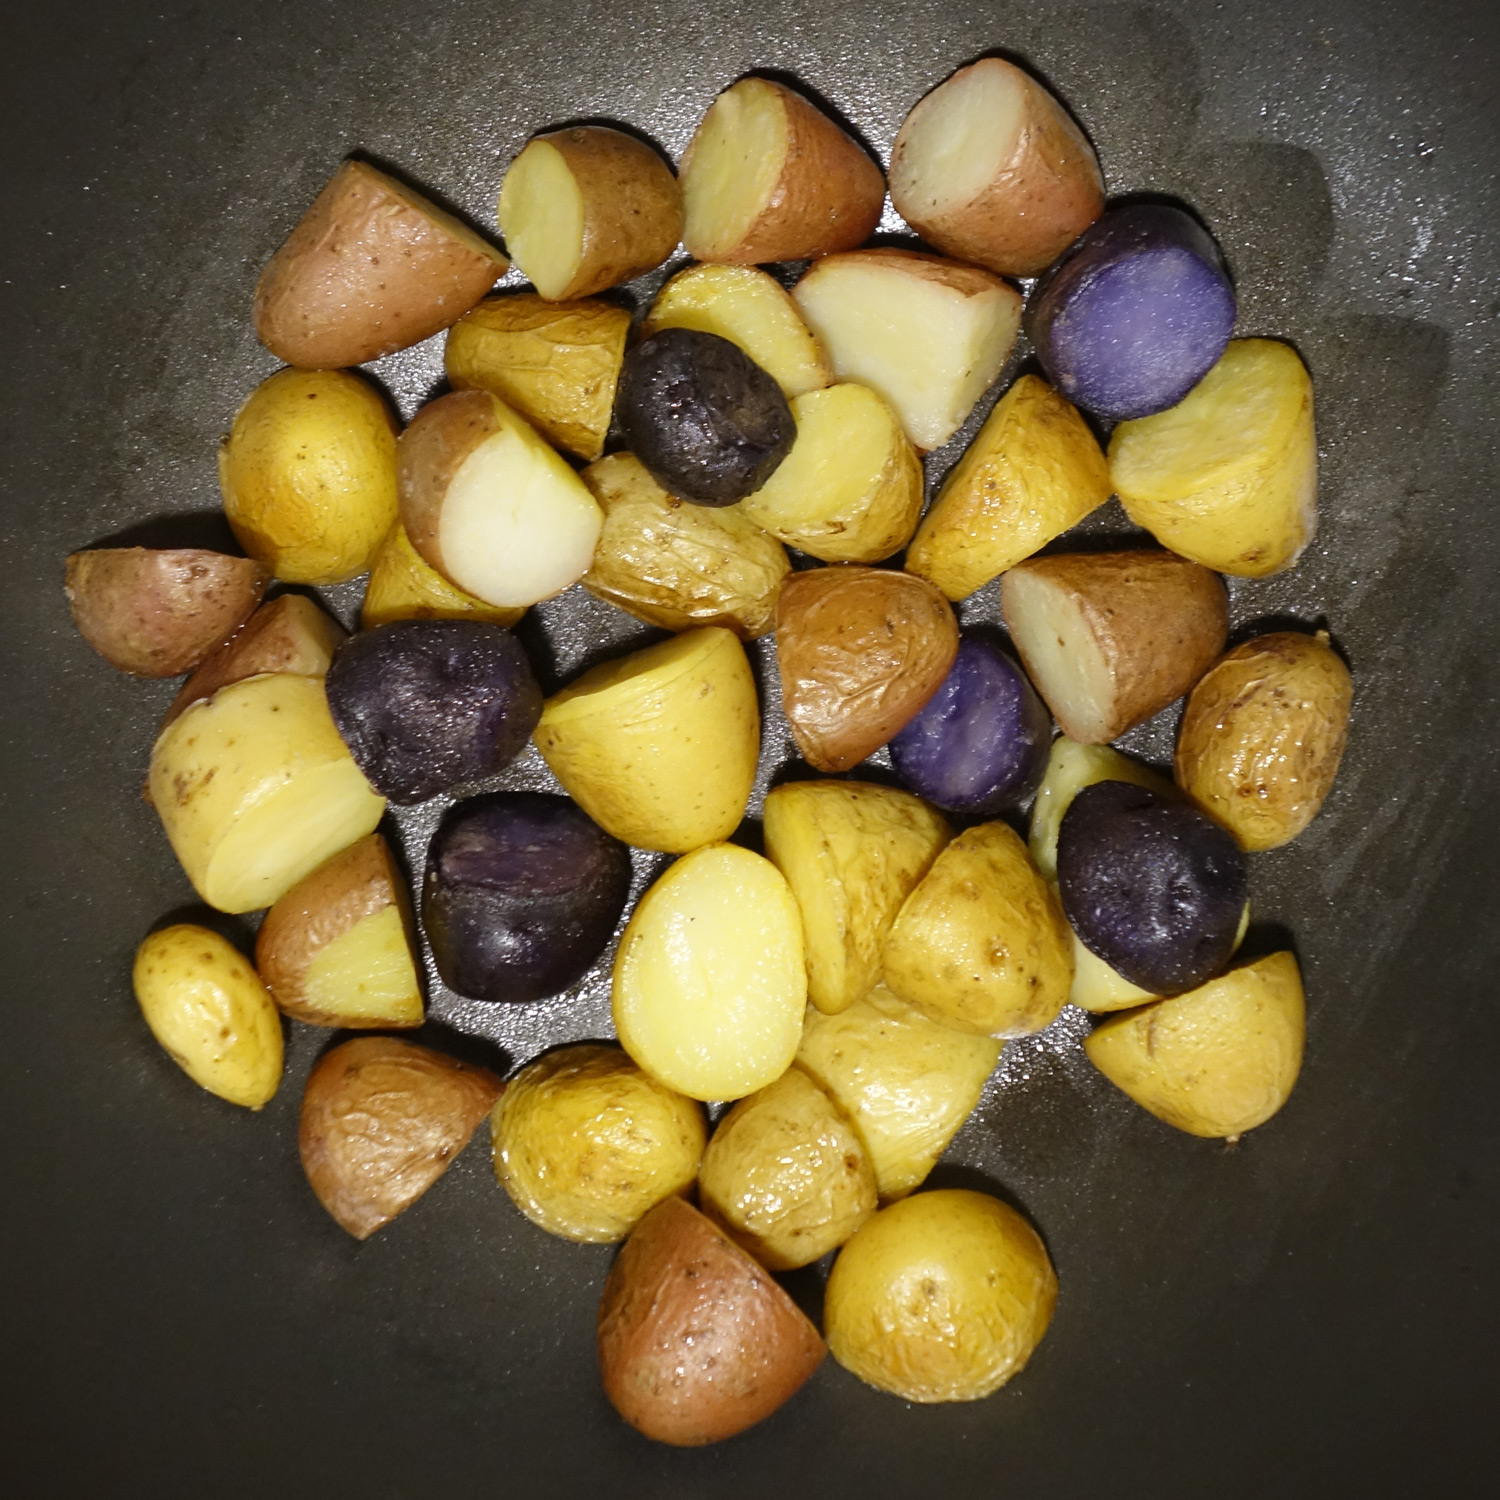 repainville - la patatas son cuitas